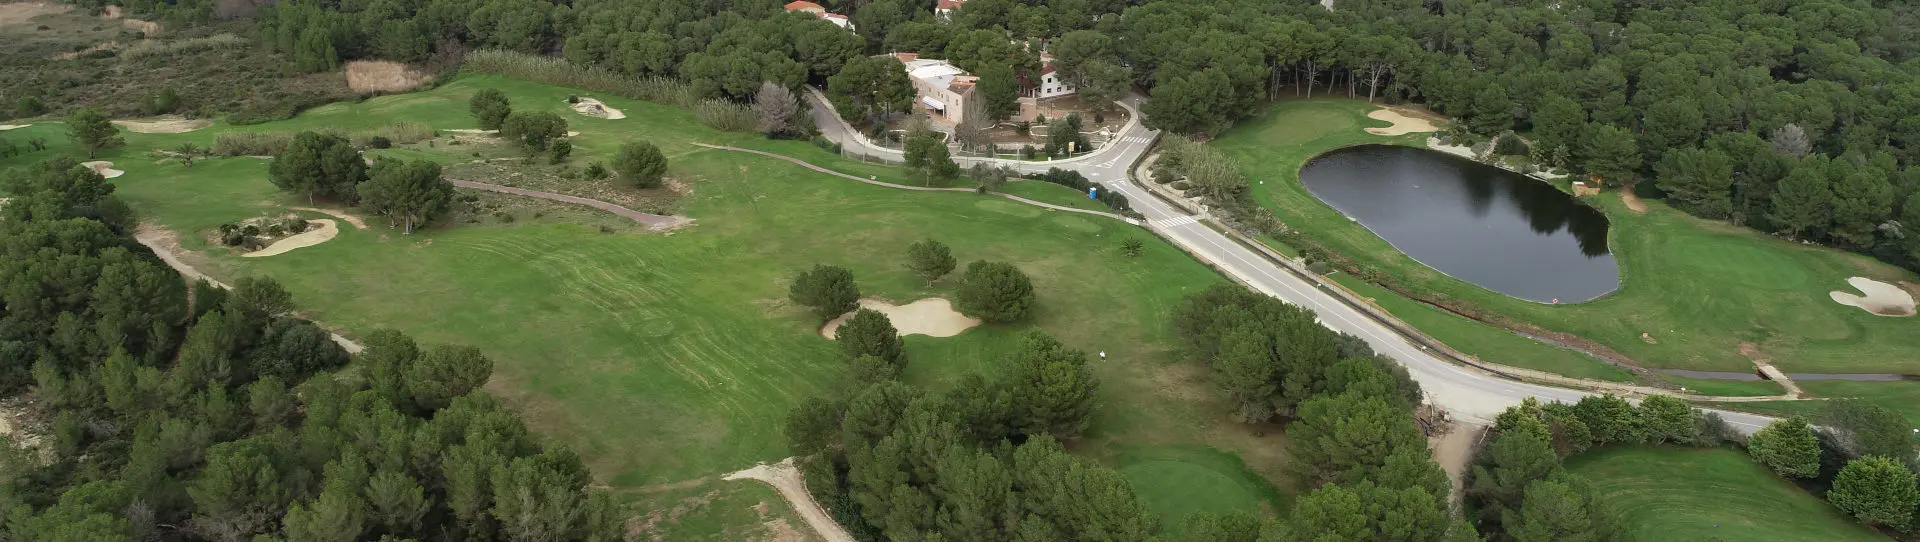 Spain golf courses - Son Parc Menorca Golf Course - Photo 3